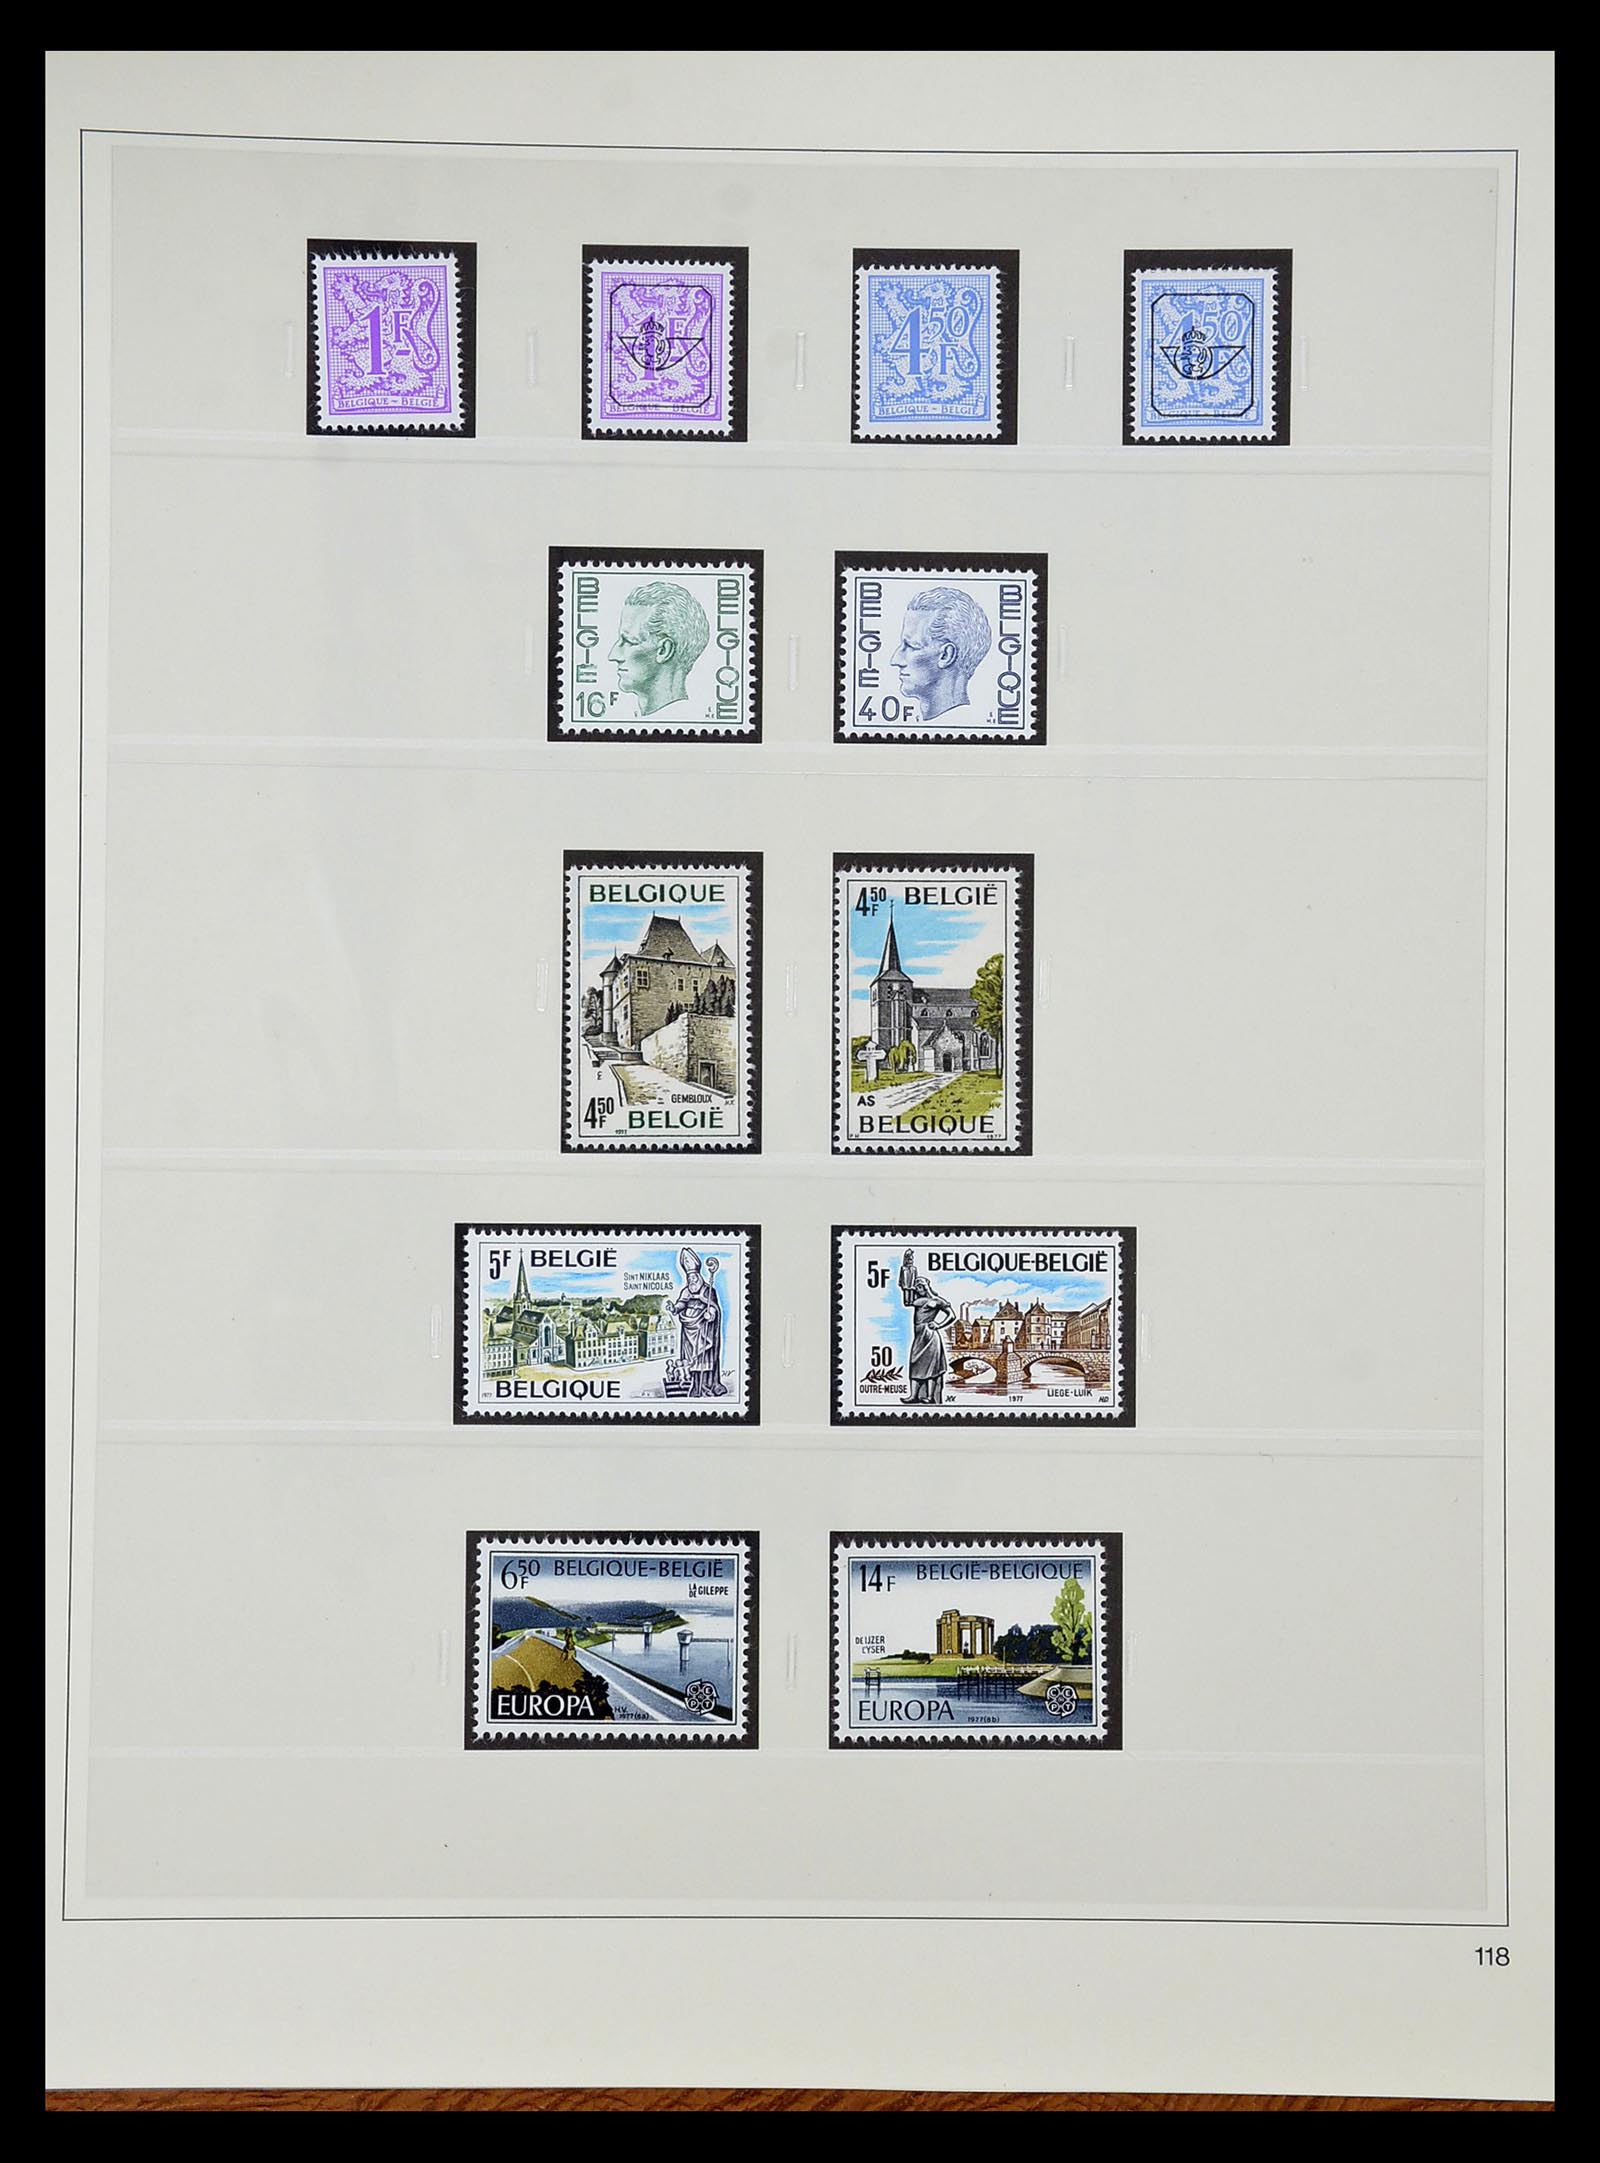 34658 106 - Stamp Collection 34658 Belgium 1963-2005.